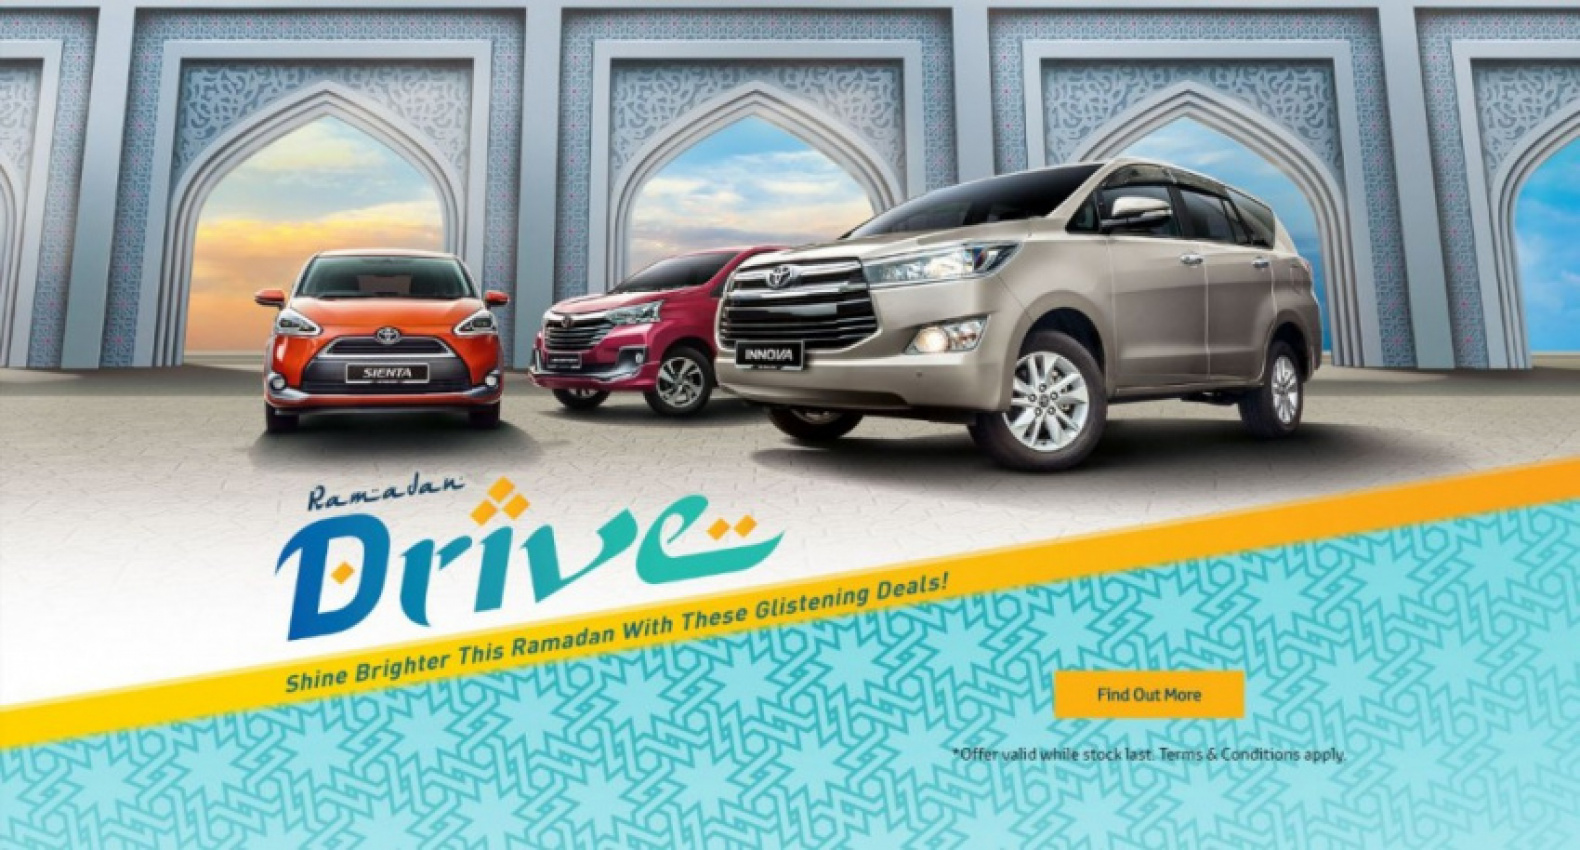 autos, cars, ram, toyota, autos toyota, toyota offers rebates for ramadan